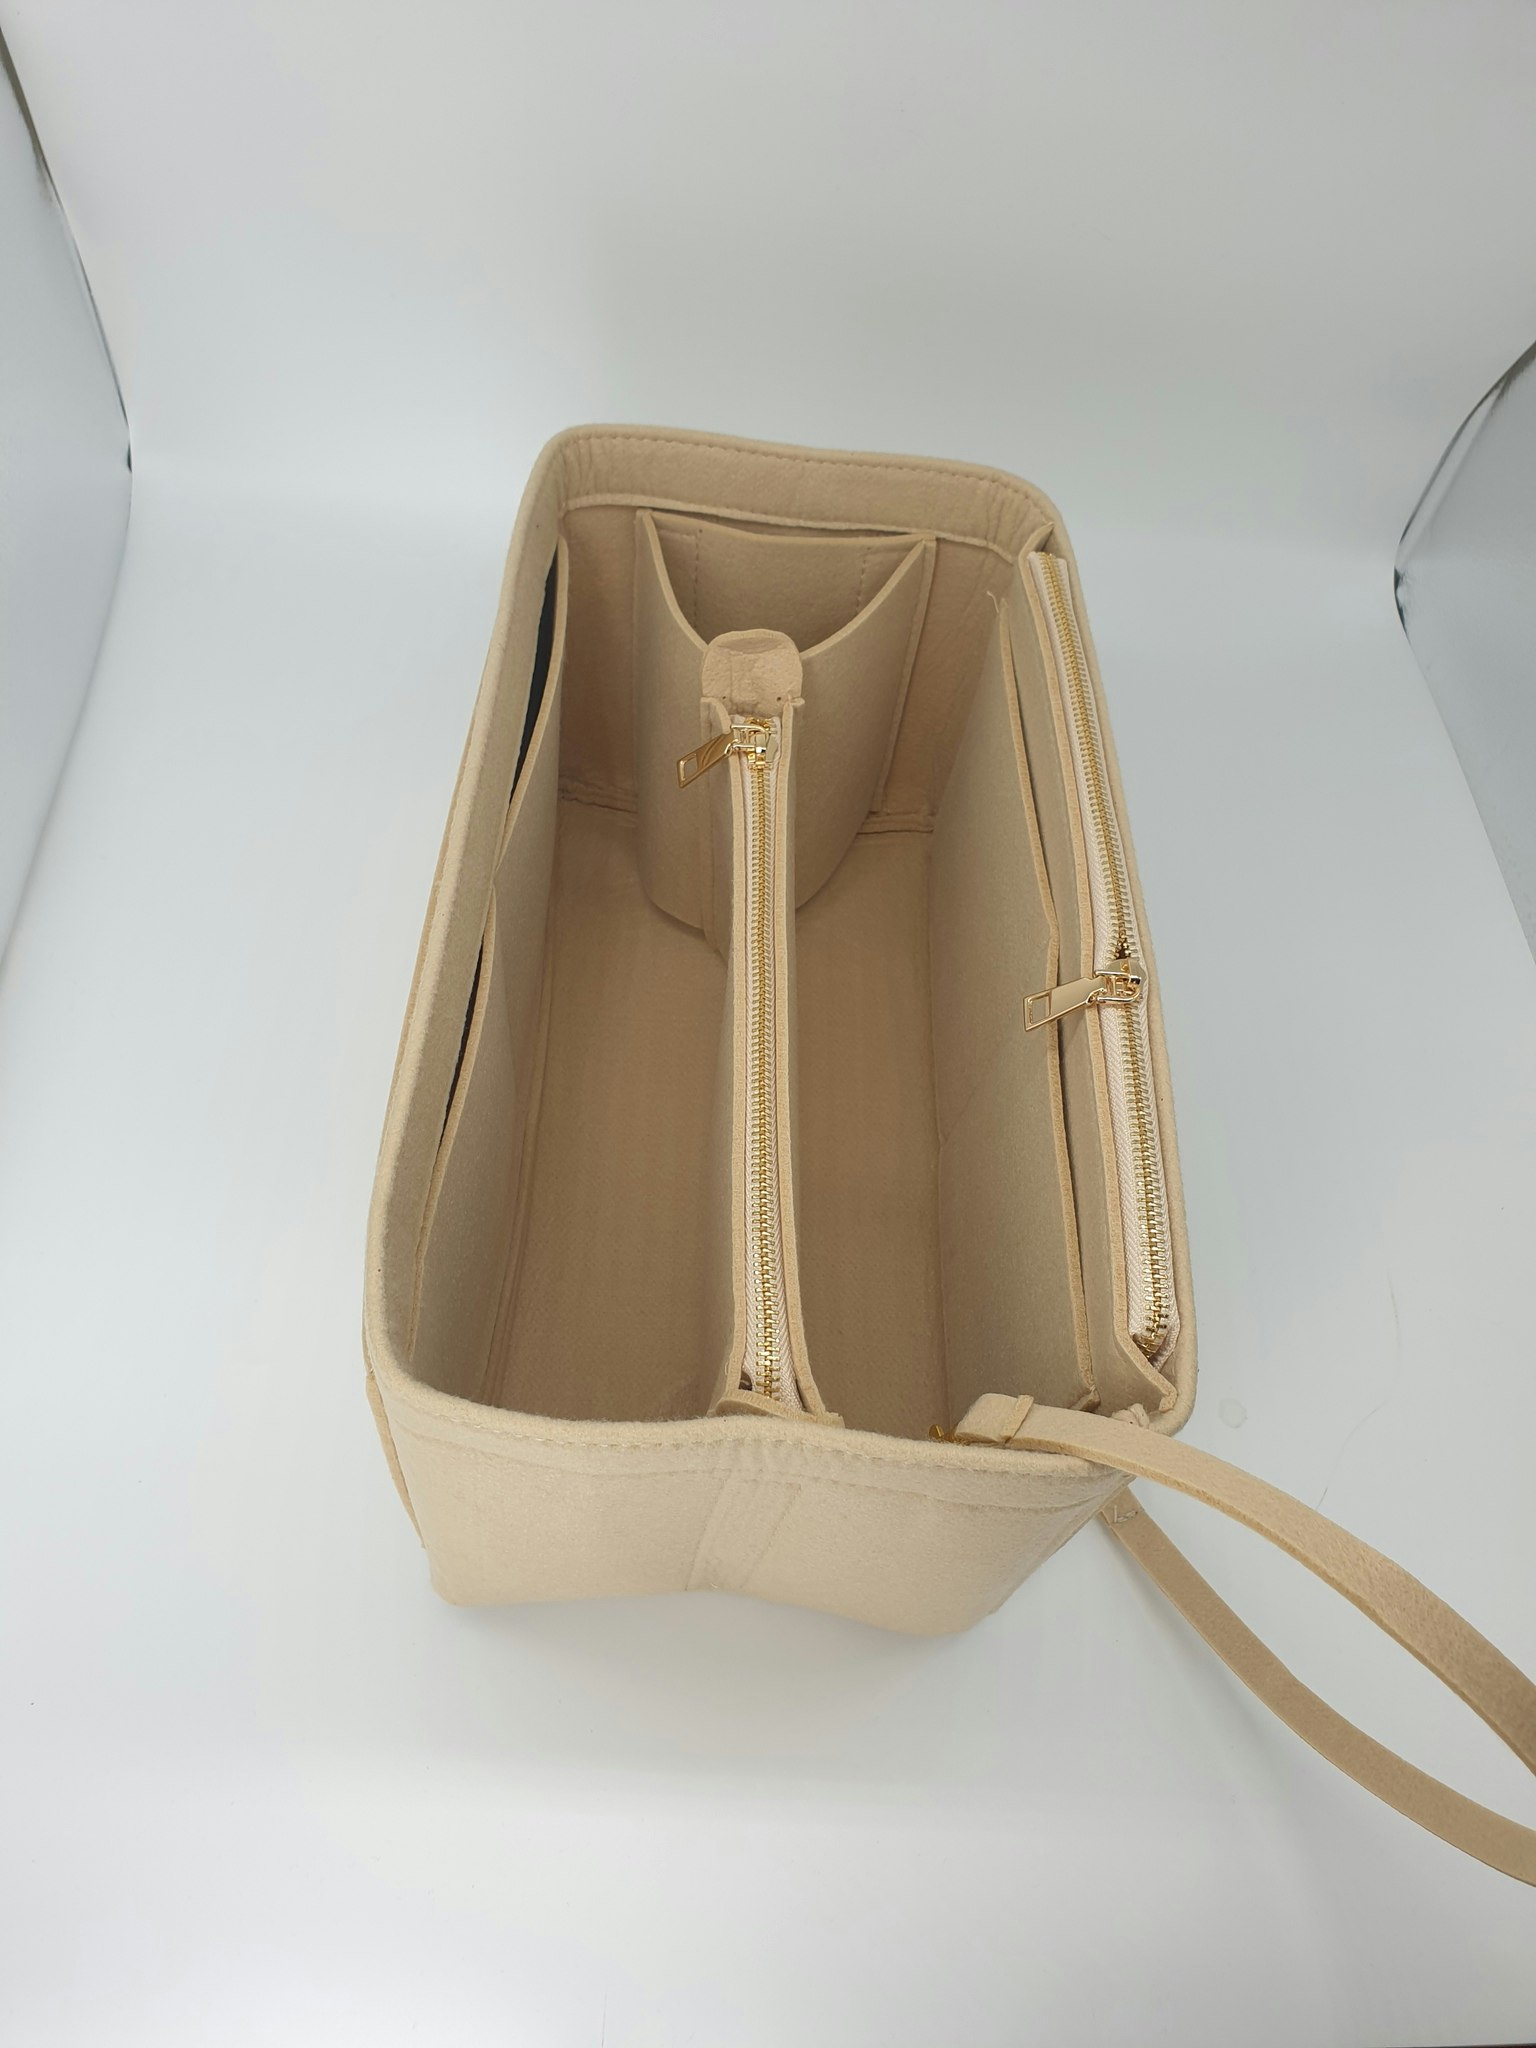 What's in Louis Vuitton Croisette with Zoomoni bag organizer 